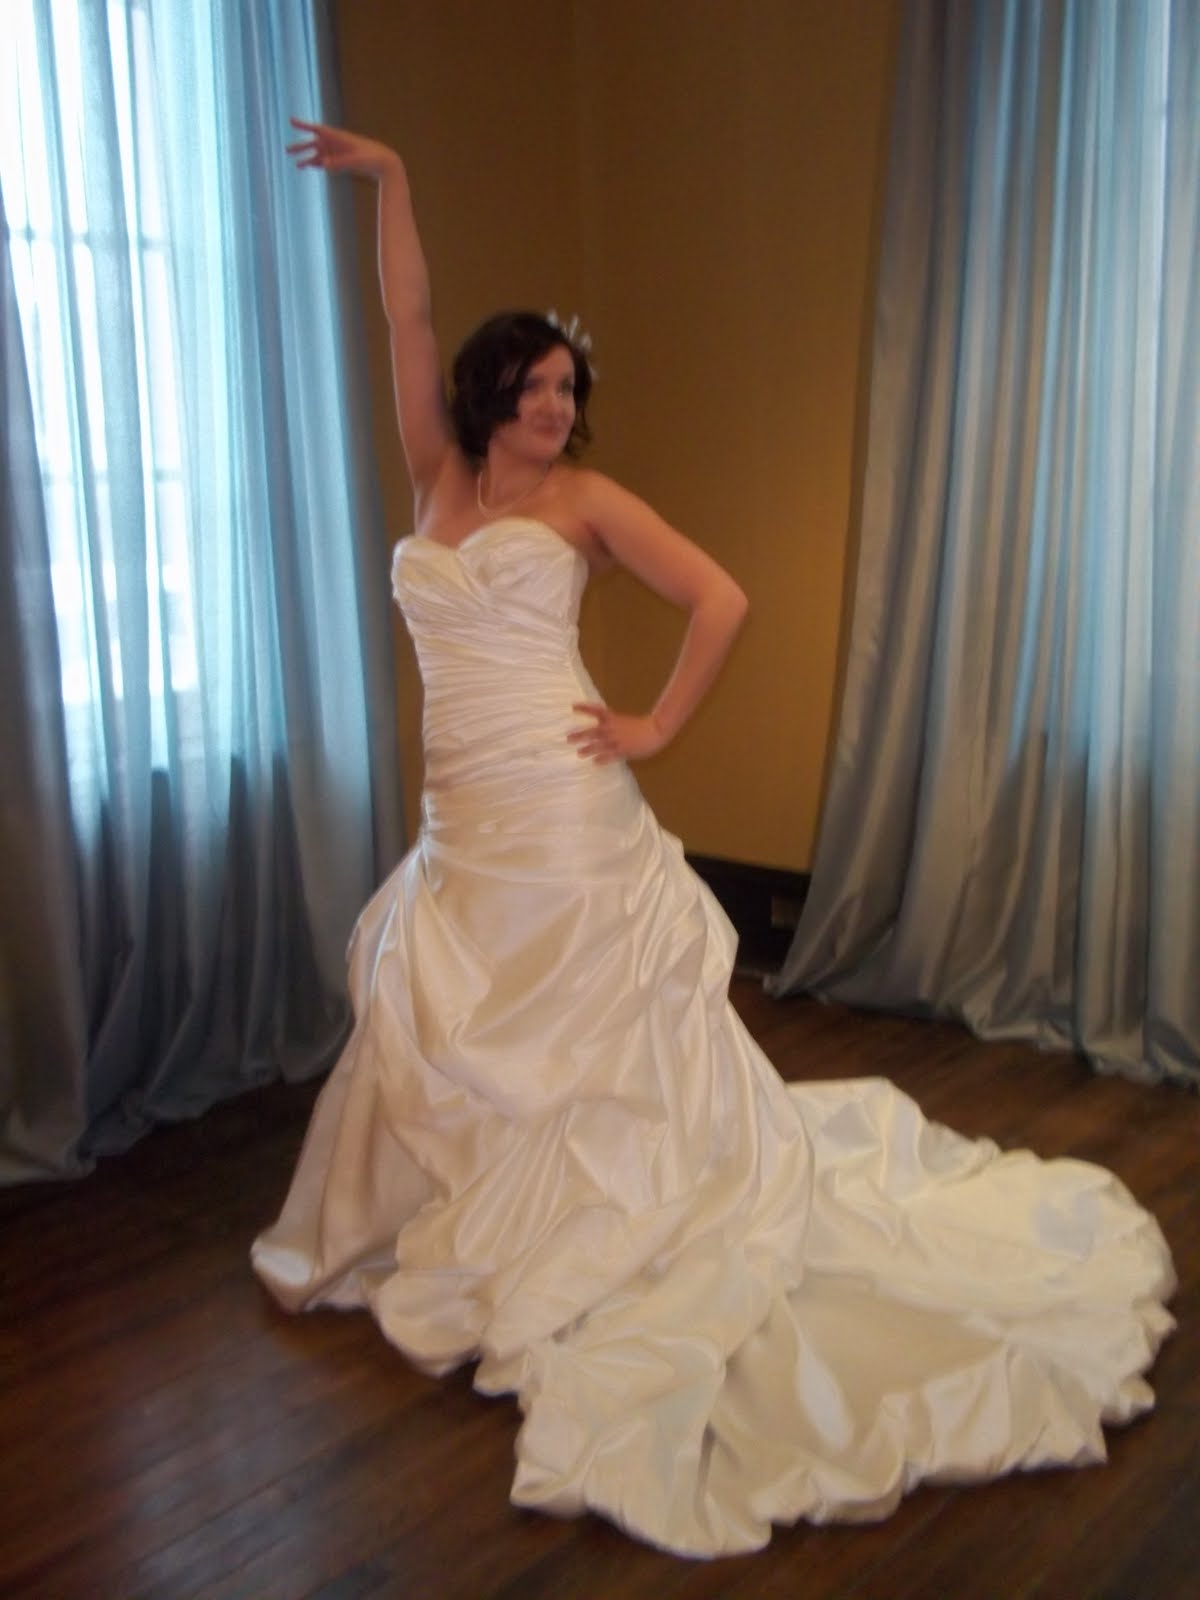 The Wedding Tree: Bridal Body Shapes: What Dress Should I Wear?